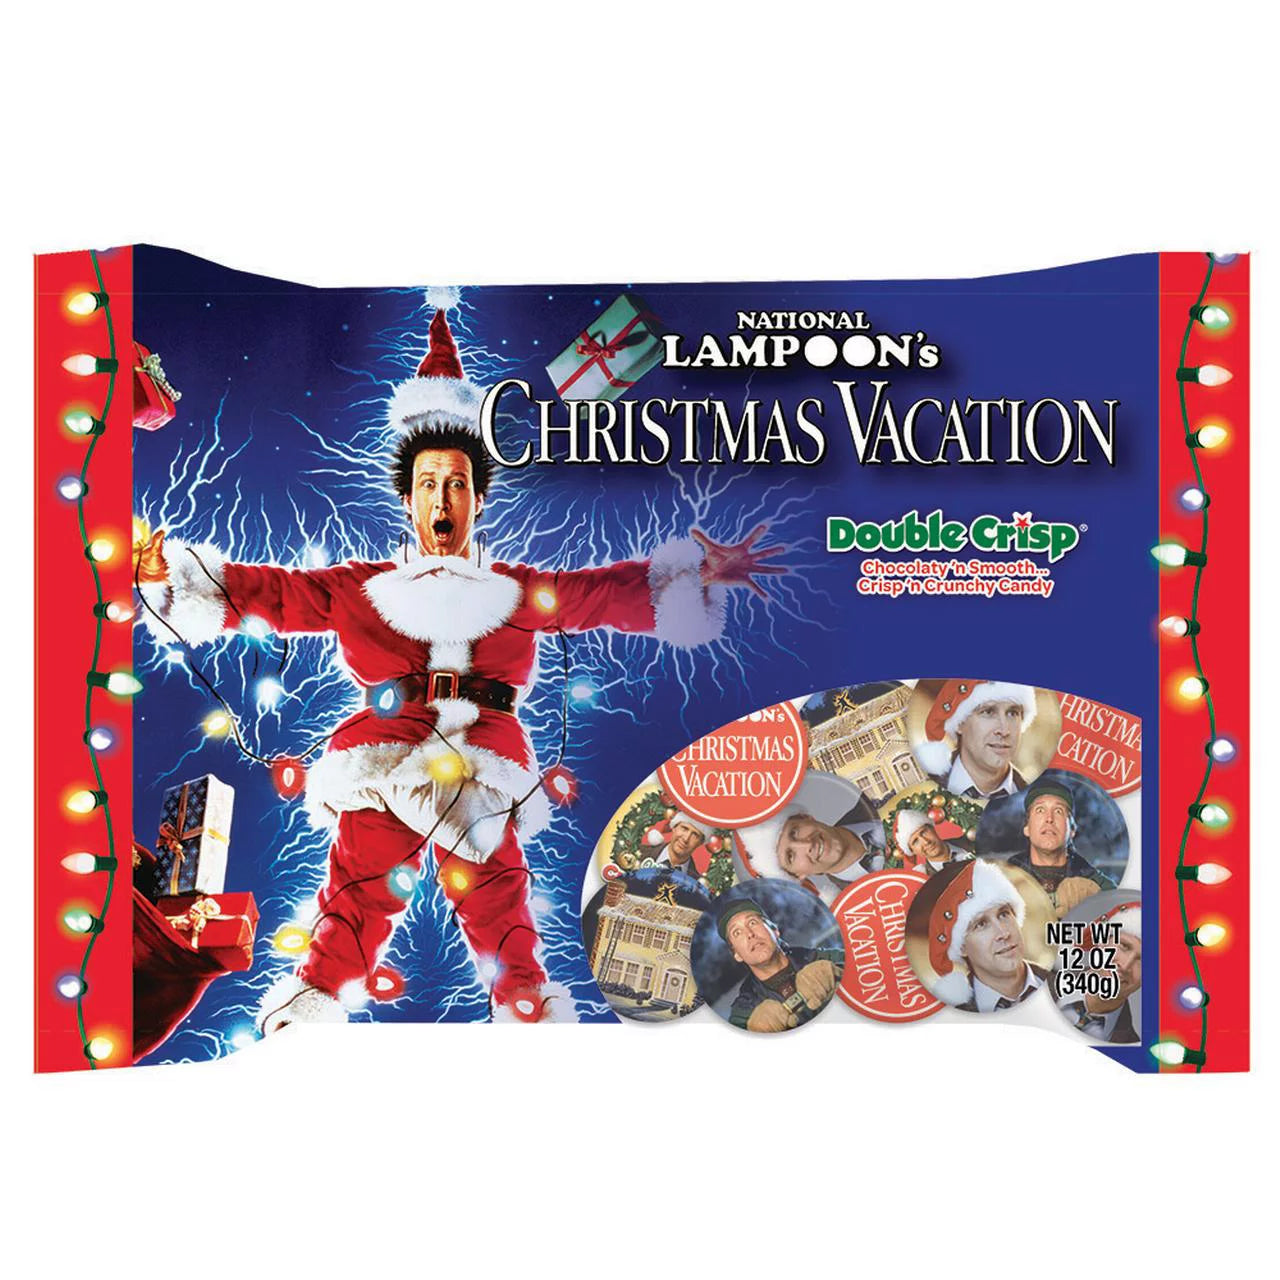 R M Palmer National Lampoon's Christmas Vacation Double Crisp chocolate discs 12 oz Bag